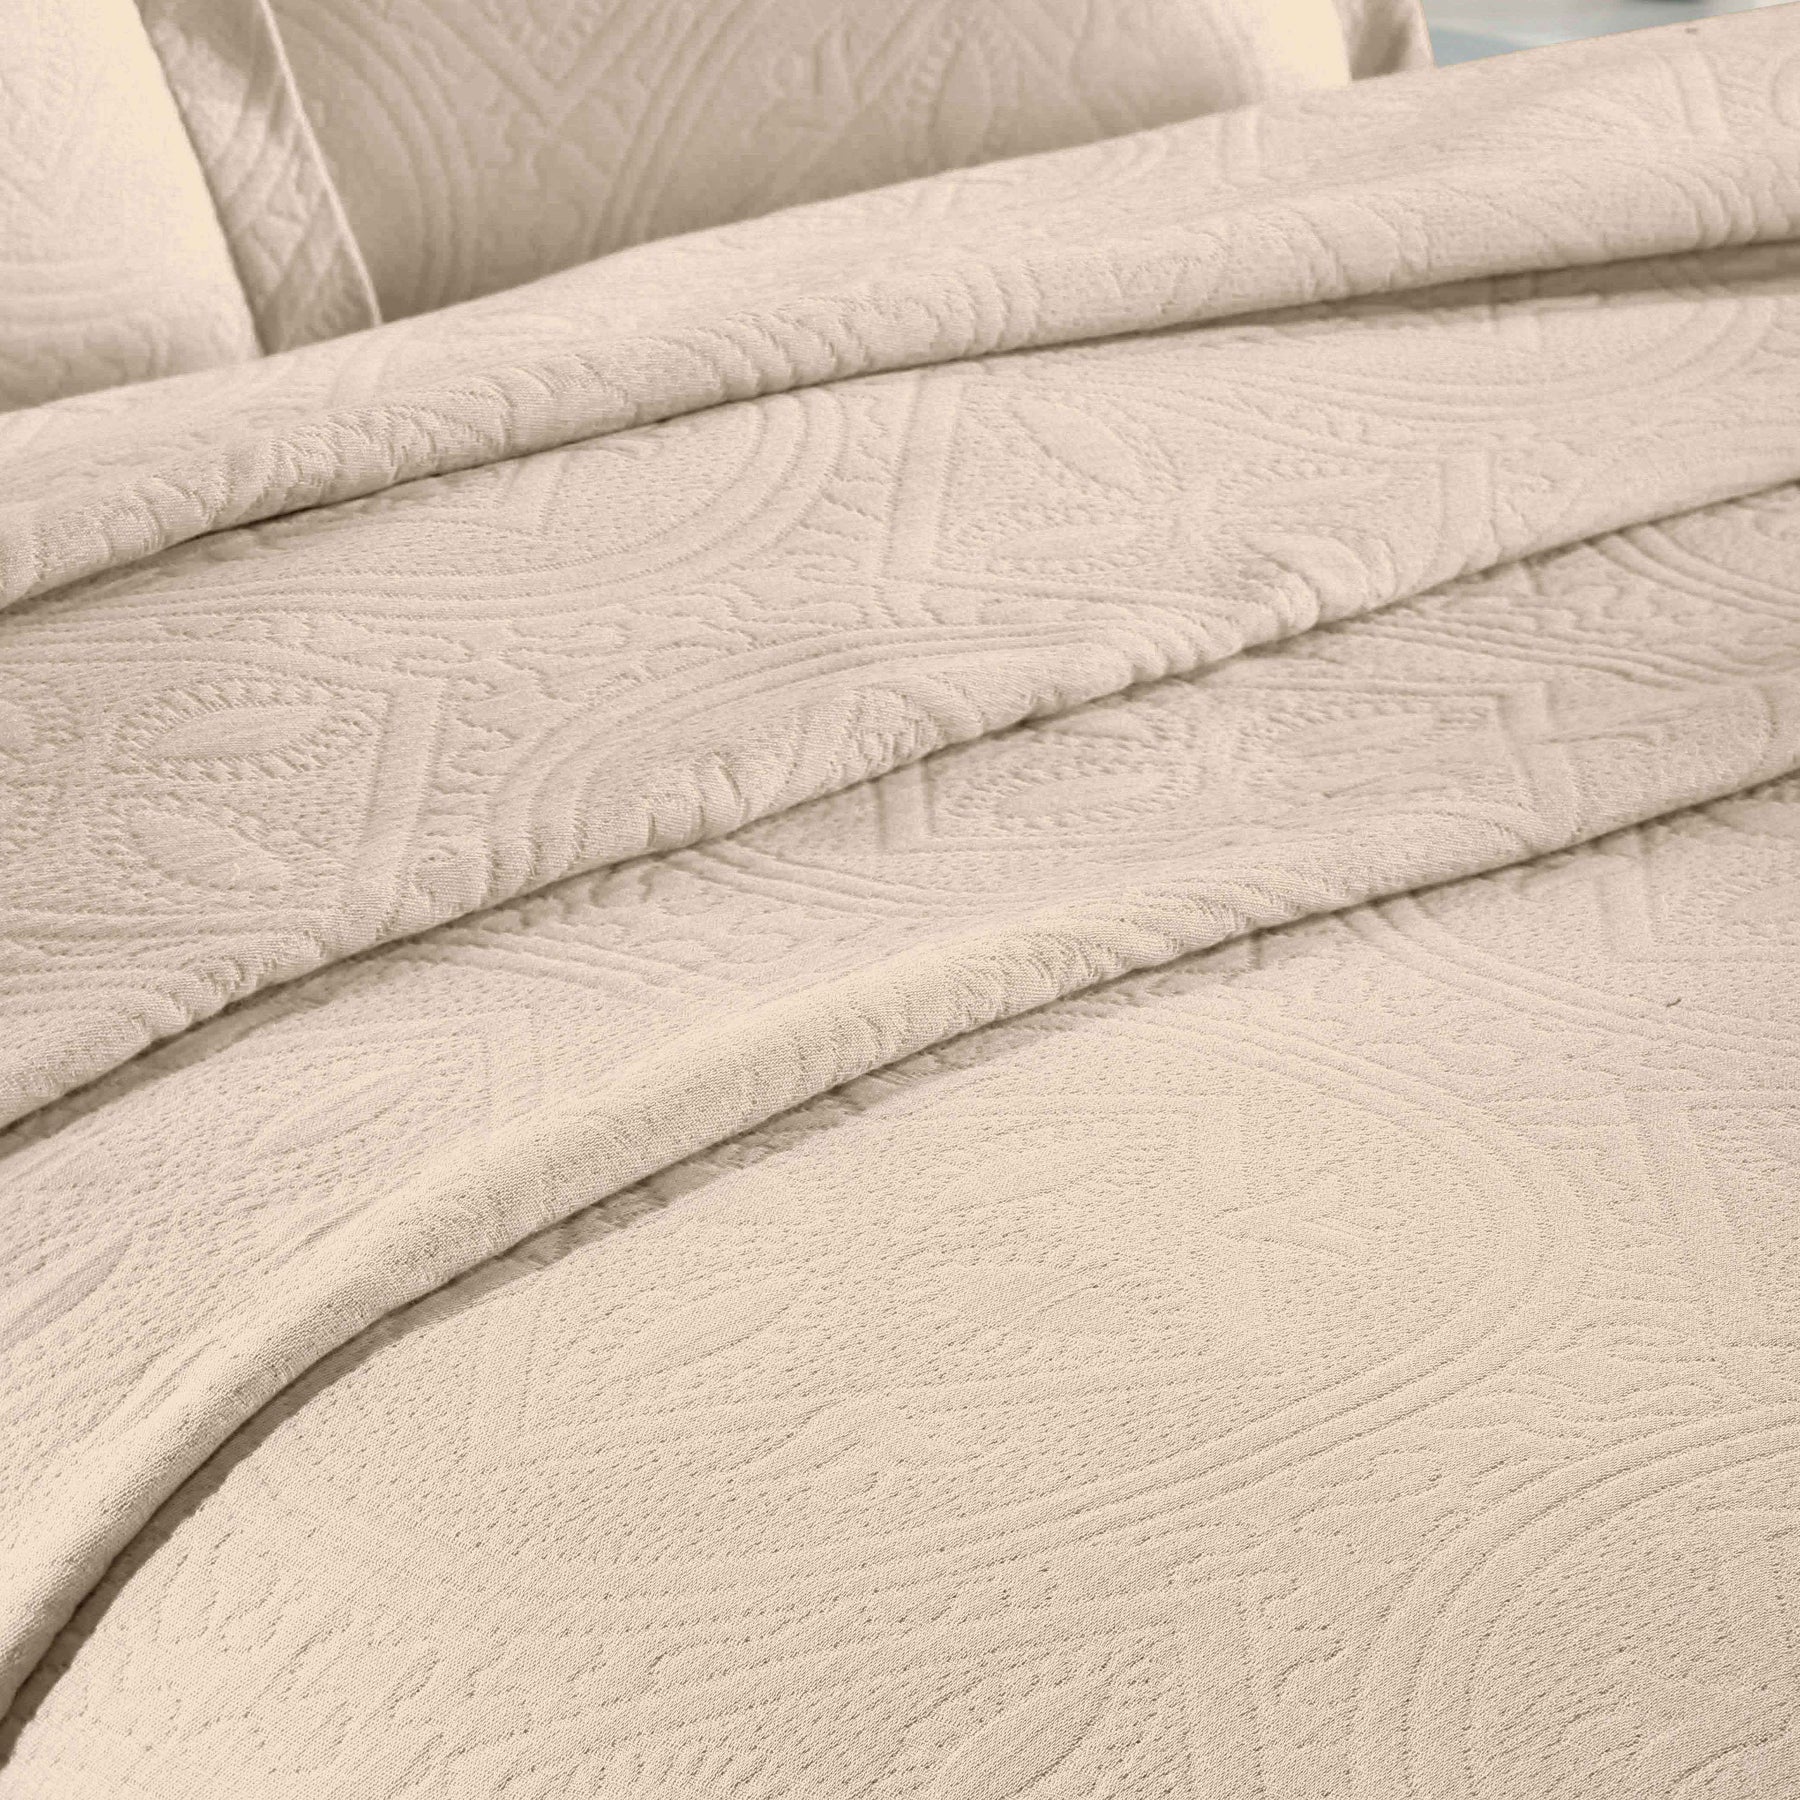 Celtic Circle Cotton Jacquard Matelasse Bedspread Set - Ivory